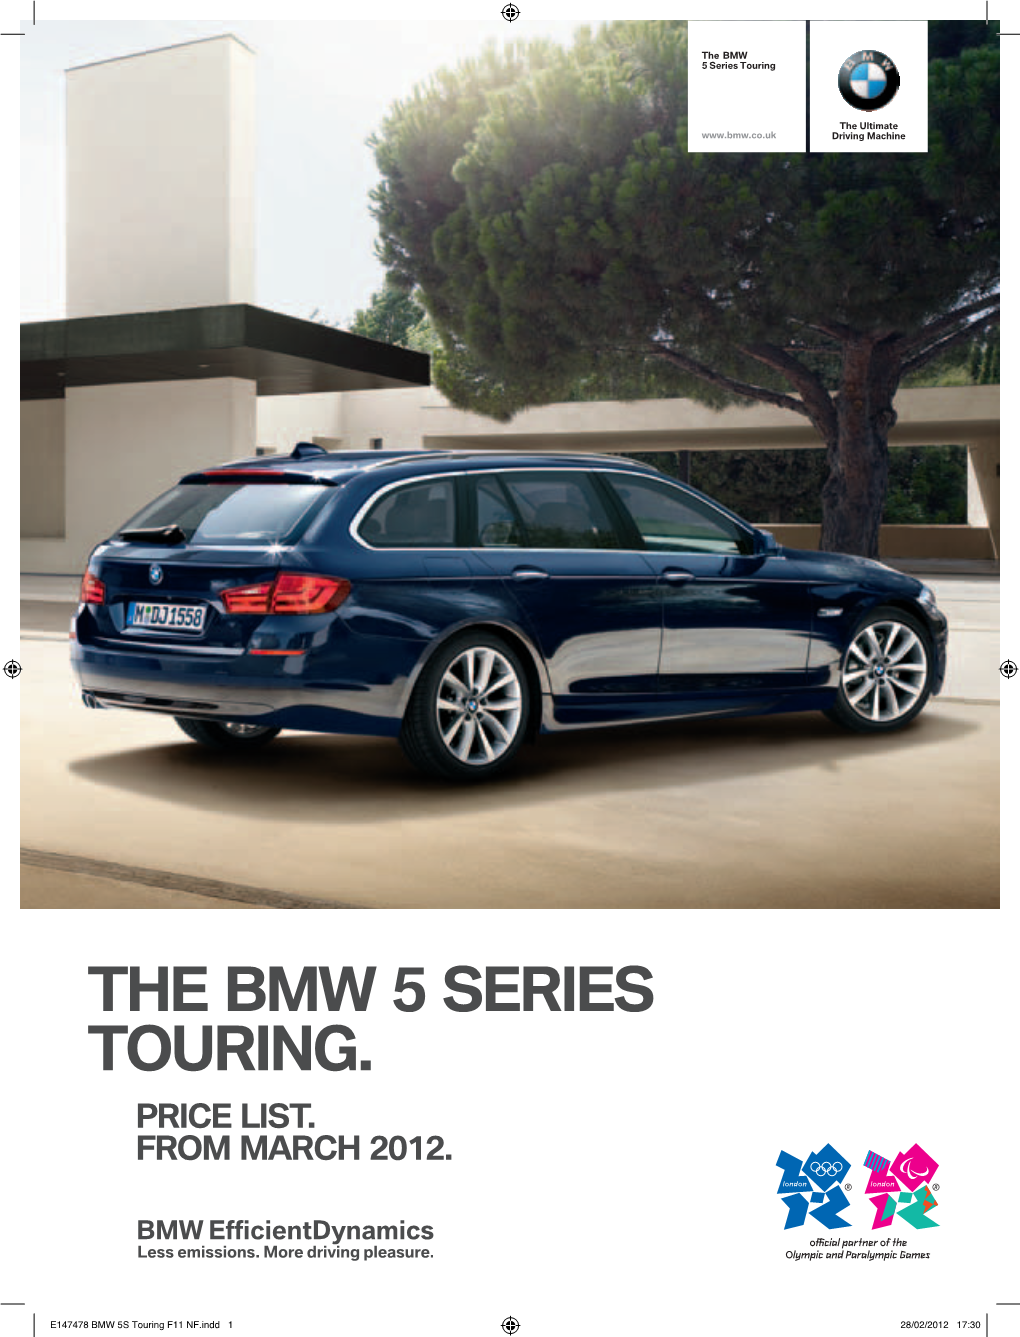 THE BMW 5 Series TOURING. Price List